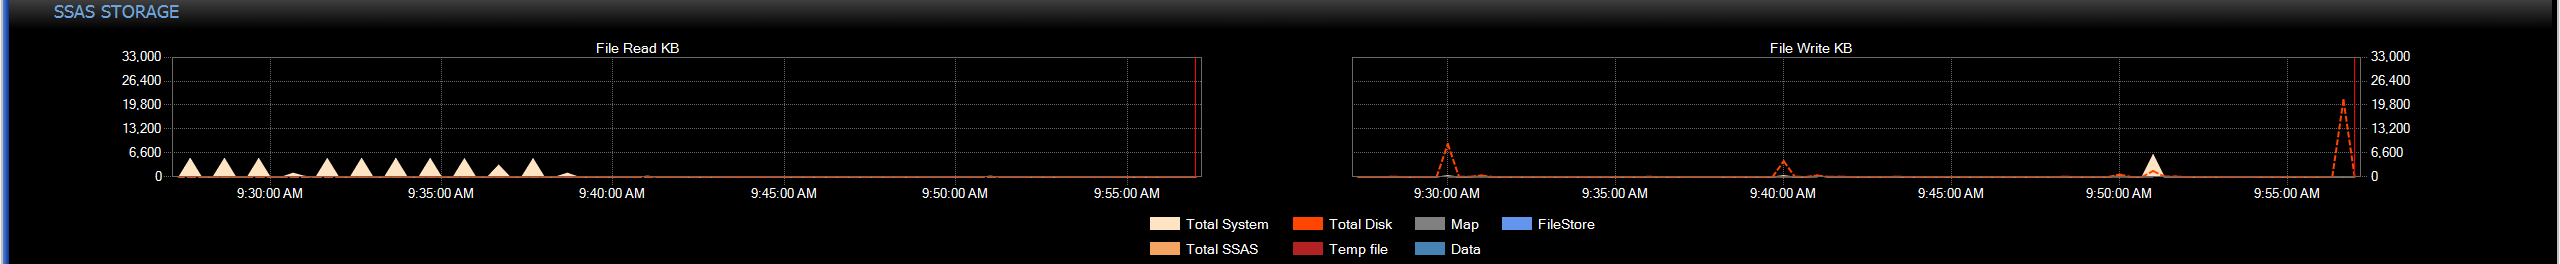 Performance Analysis Dashboard SSAS Storage Tabular chart